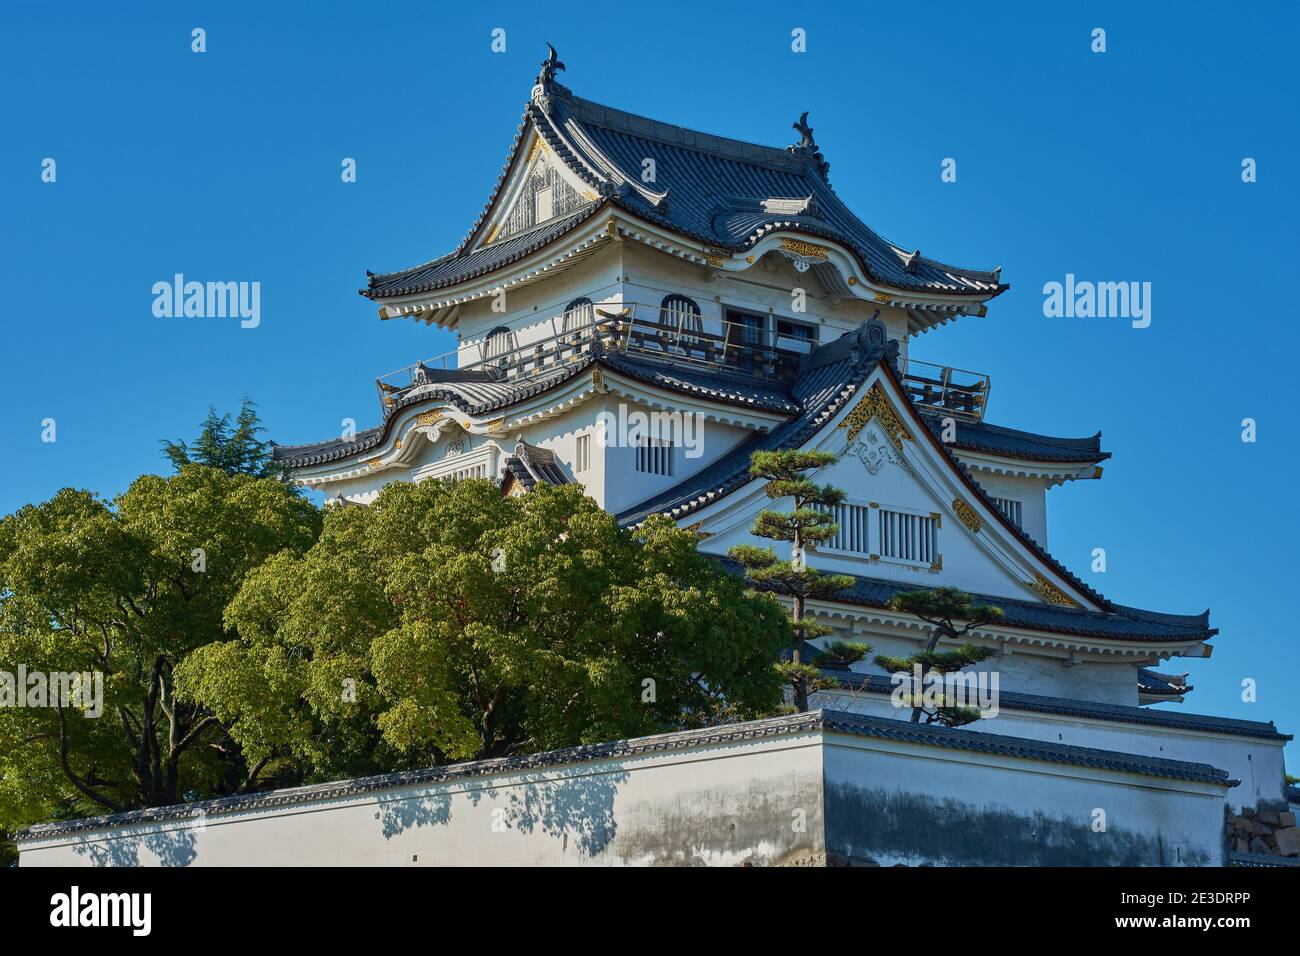 Kishiwada castle (Chikiri Castle) built in 16th century in Kishiwada city, Osaka Prefecture, Japan Stock Photo